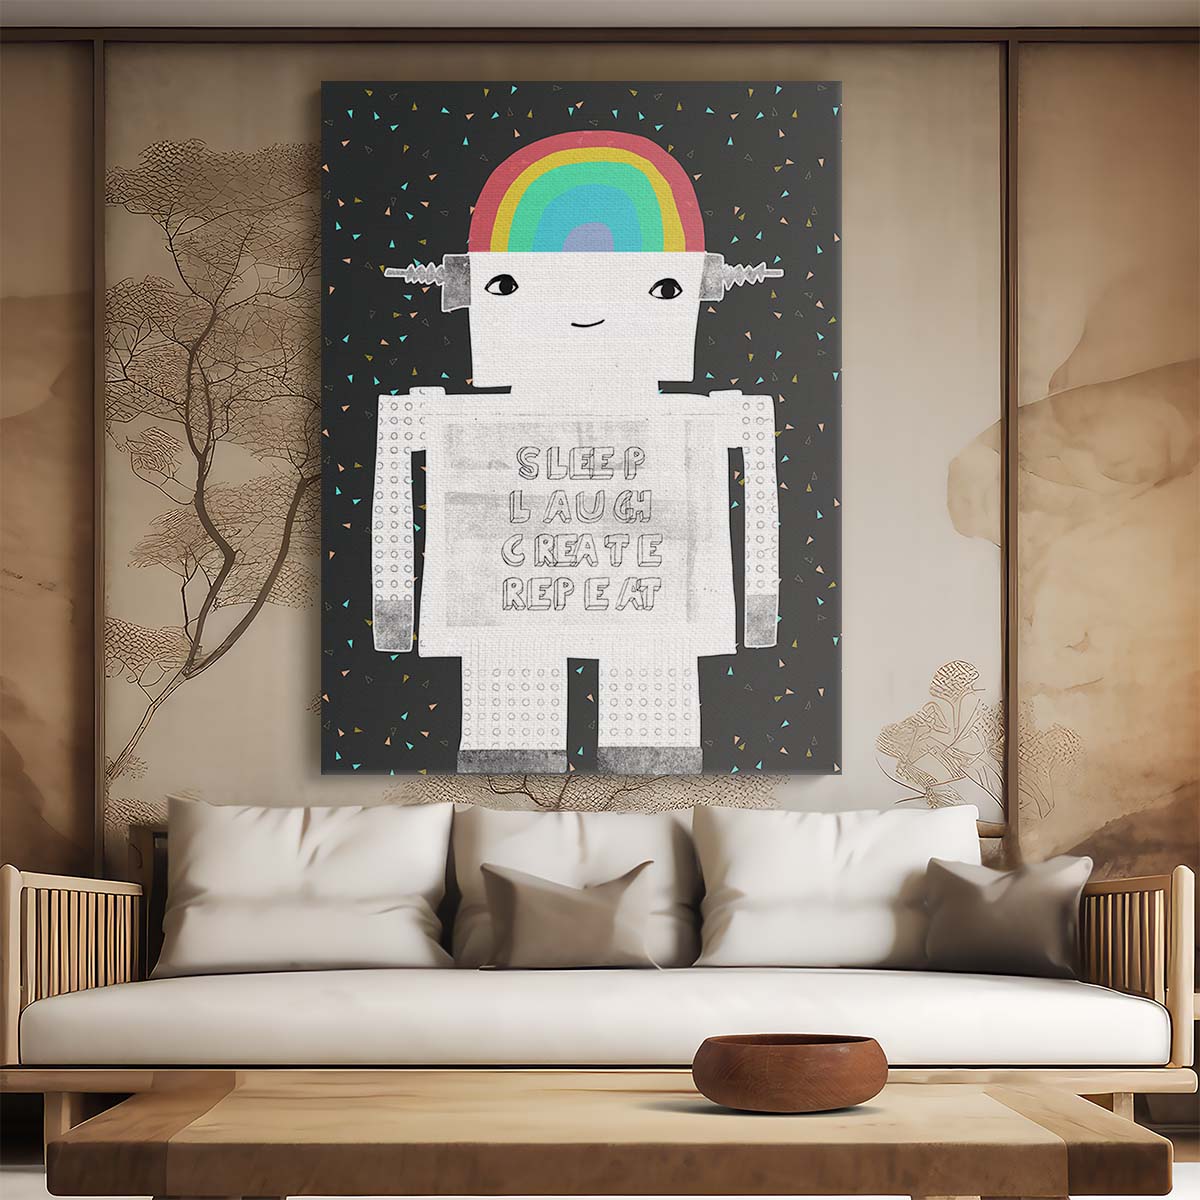 Motivational Robot Rainbow Nursery Art by Treechild by Luxuriance Designs, made in USA